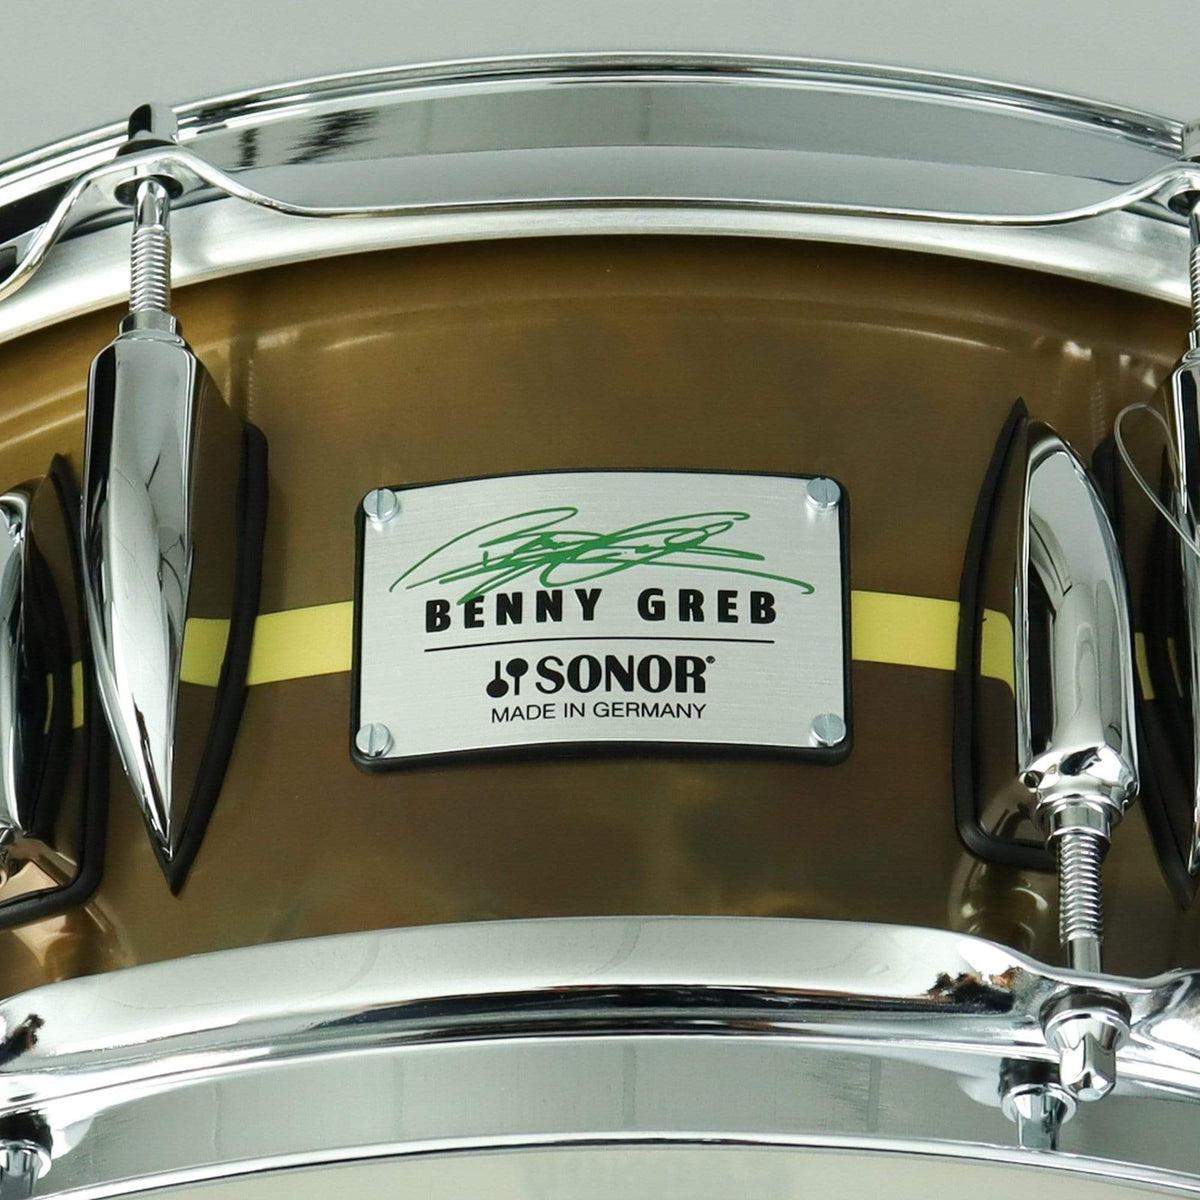 Sonor Benny Greb 13"x5.75" Brass Shell Snare Drum